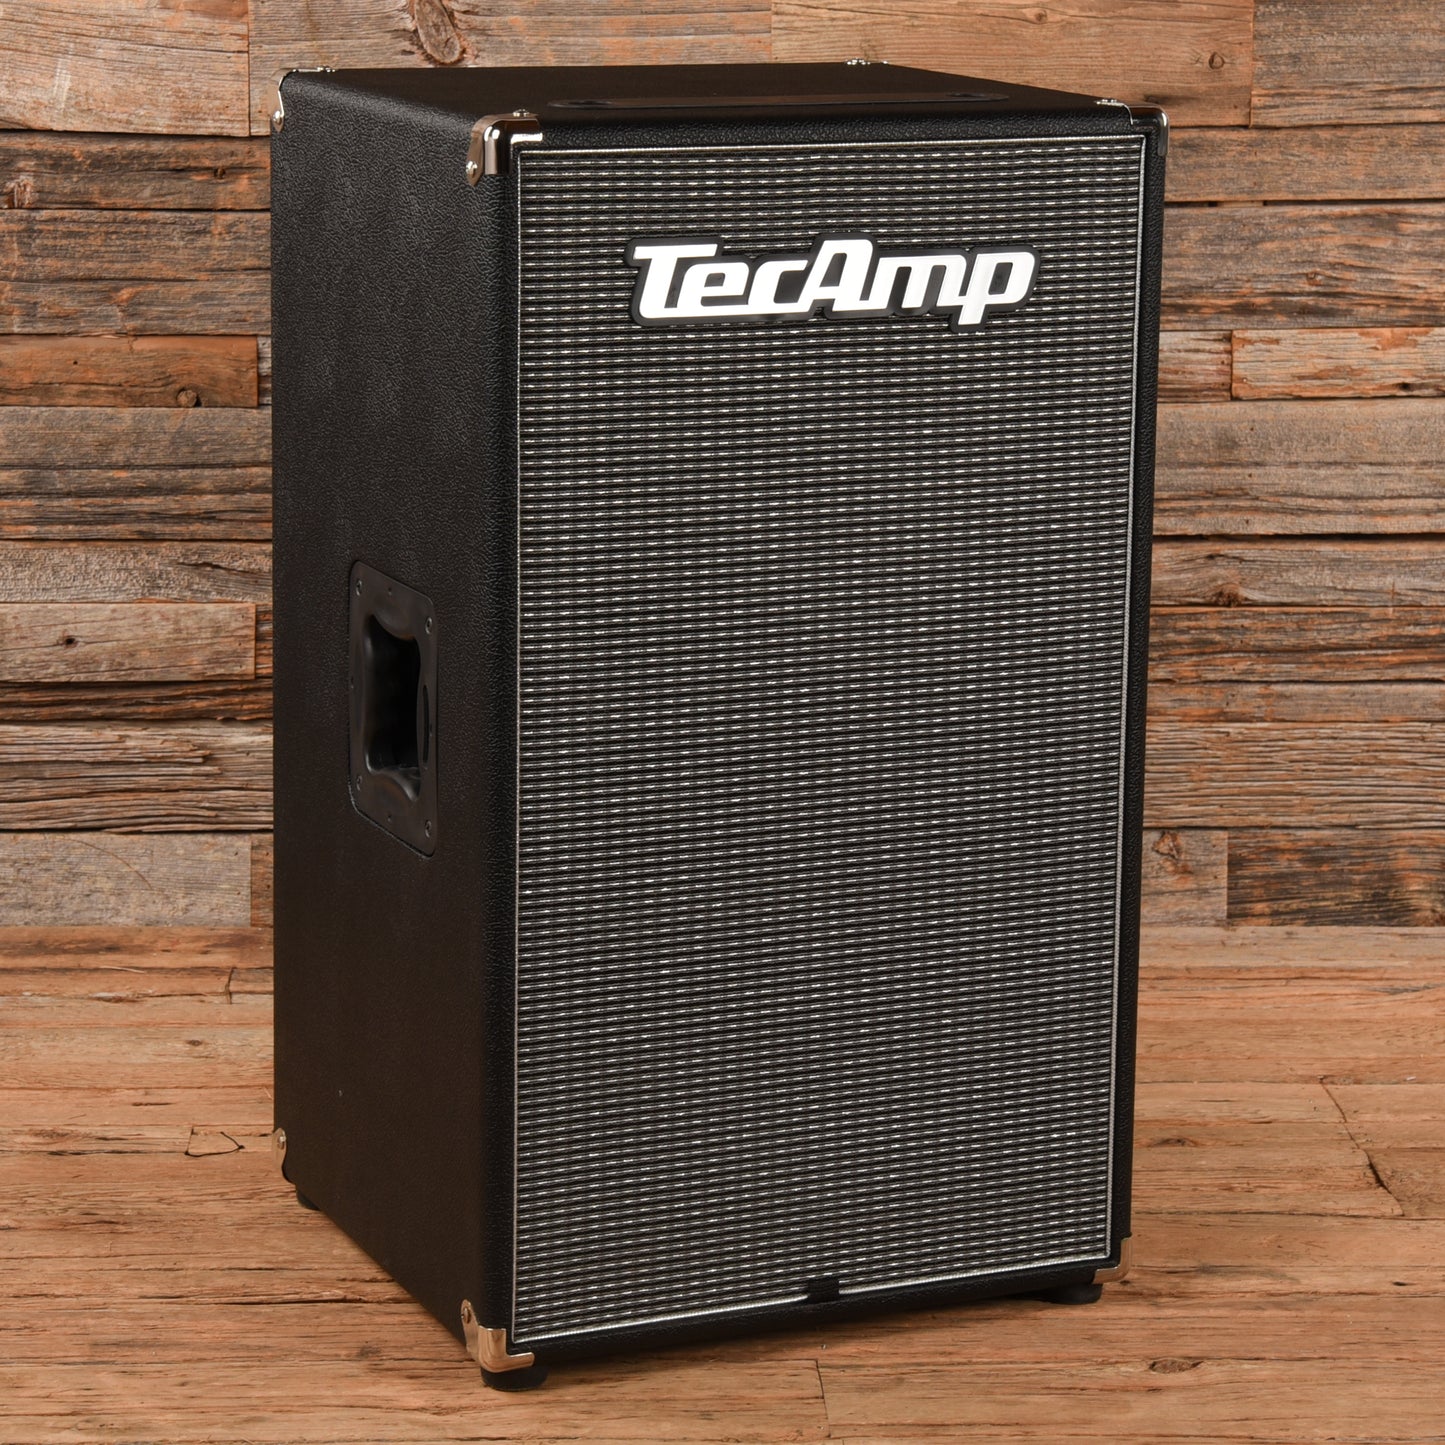 TecAmp S212 Bass Cabinet